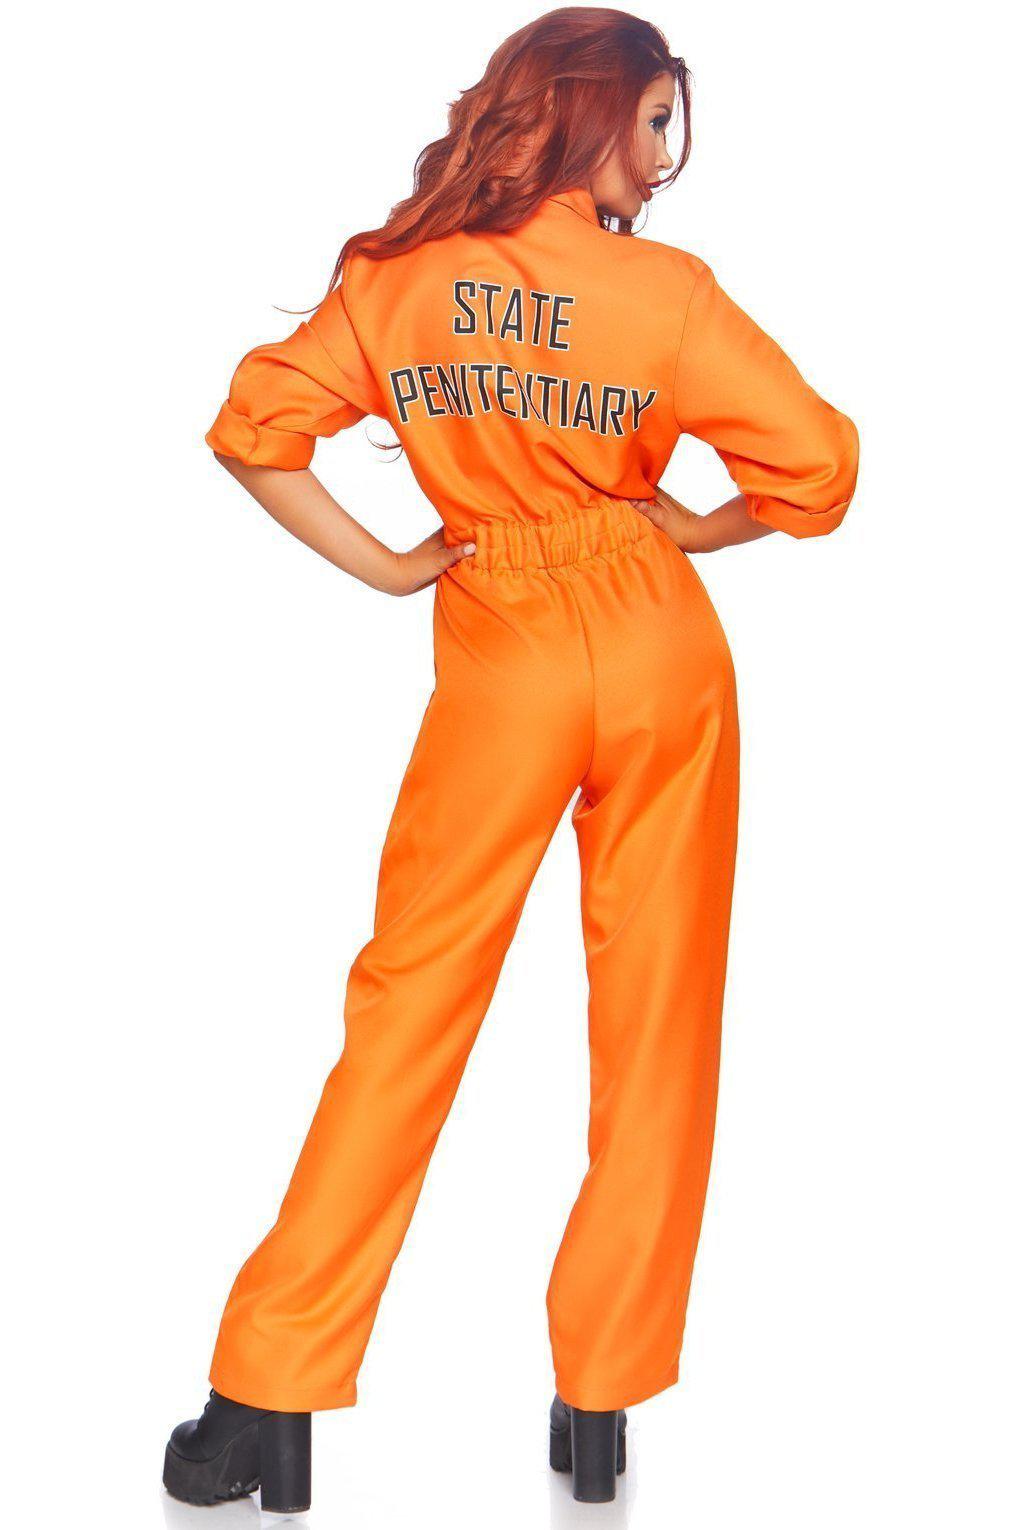 Sexy Prison Costume-Nurse Costumes-Leg Avenue-Orange-O/S-SEXYSHOES.COM